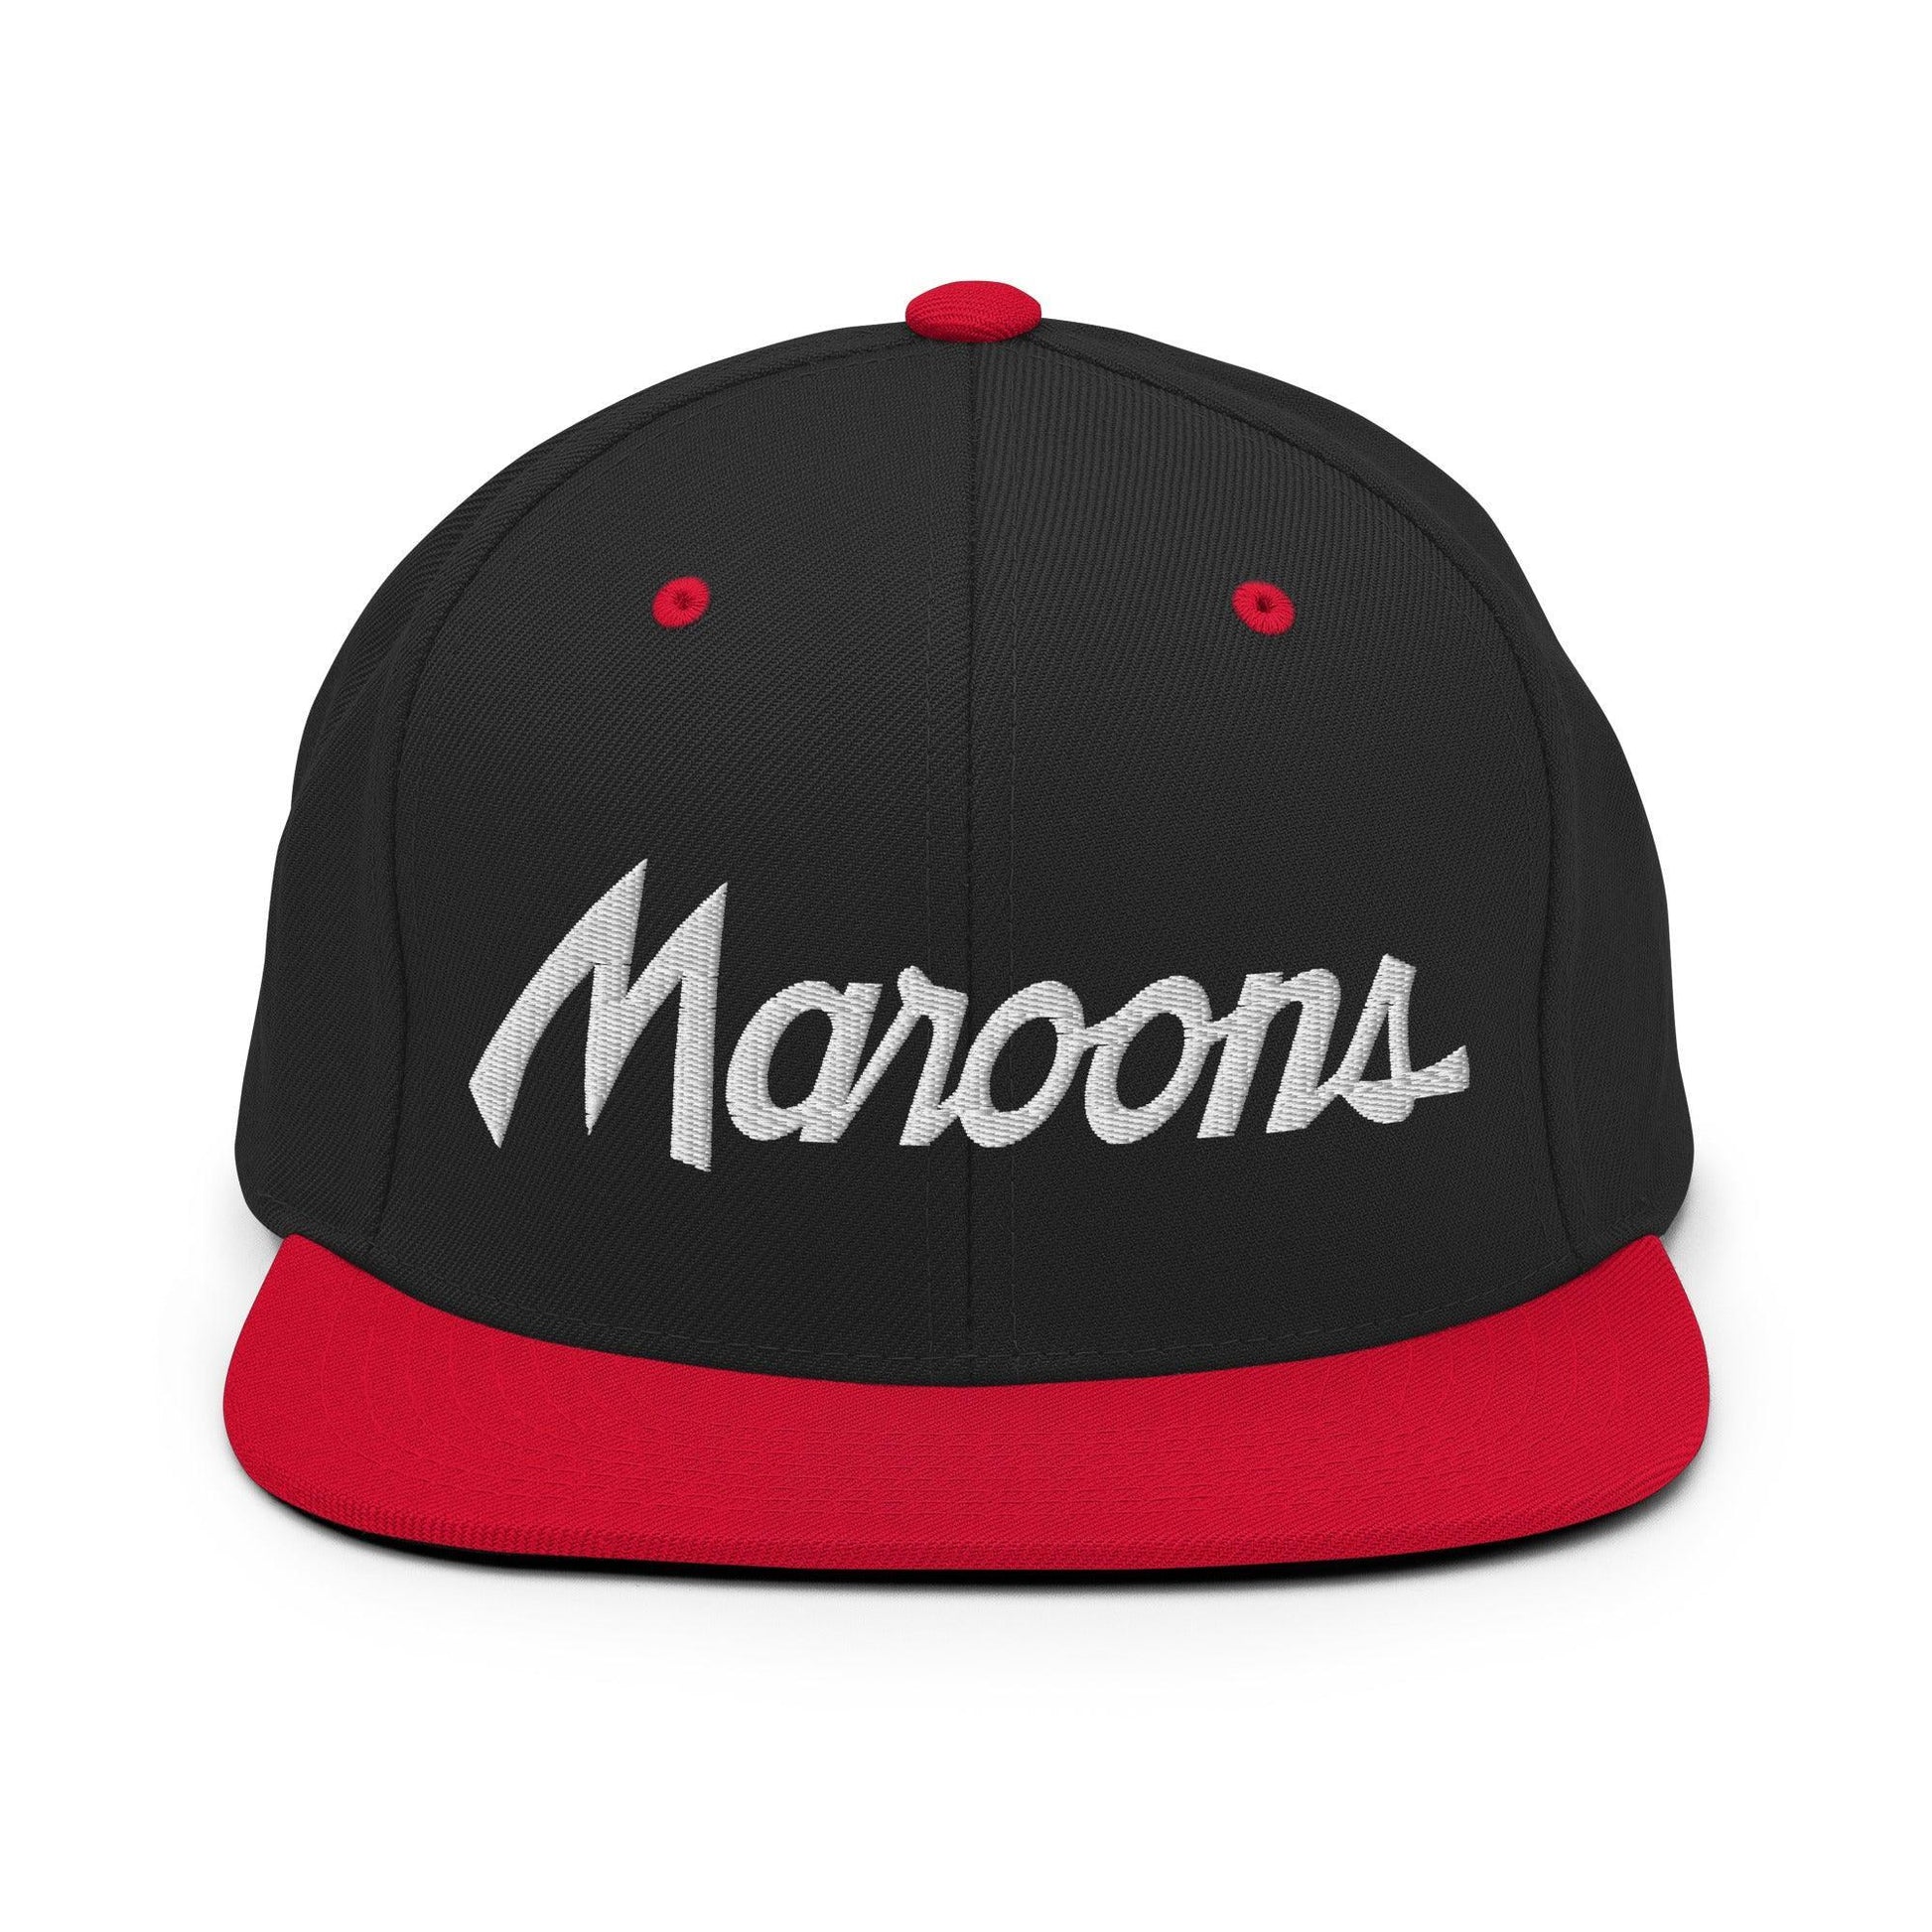 Maroons School Mascot Script Snapback Hat Black/ Red